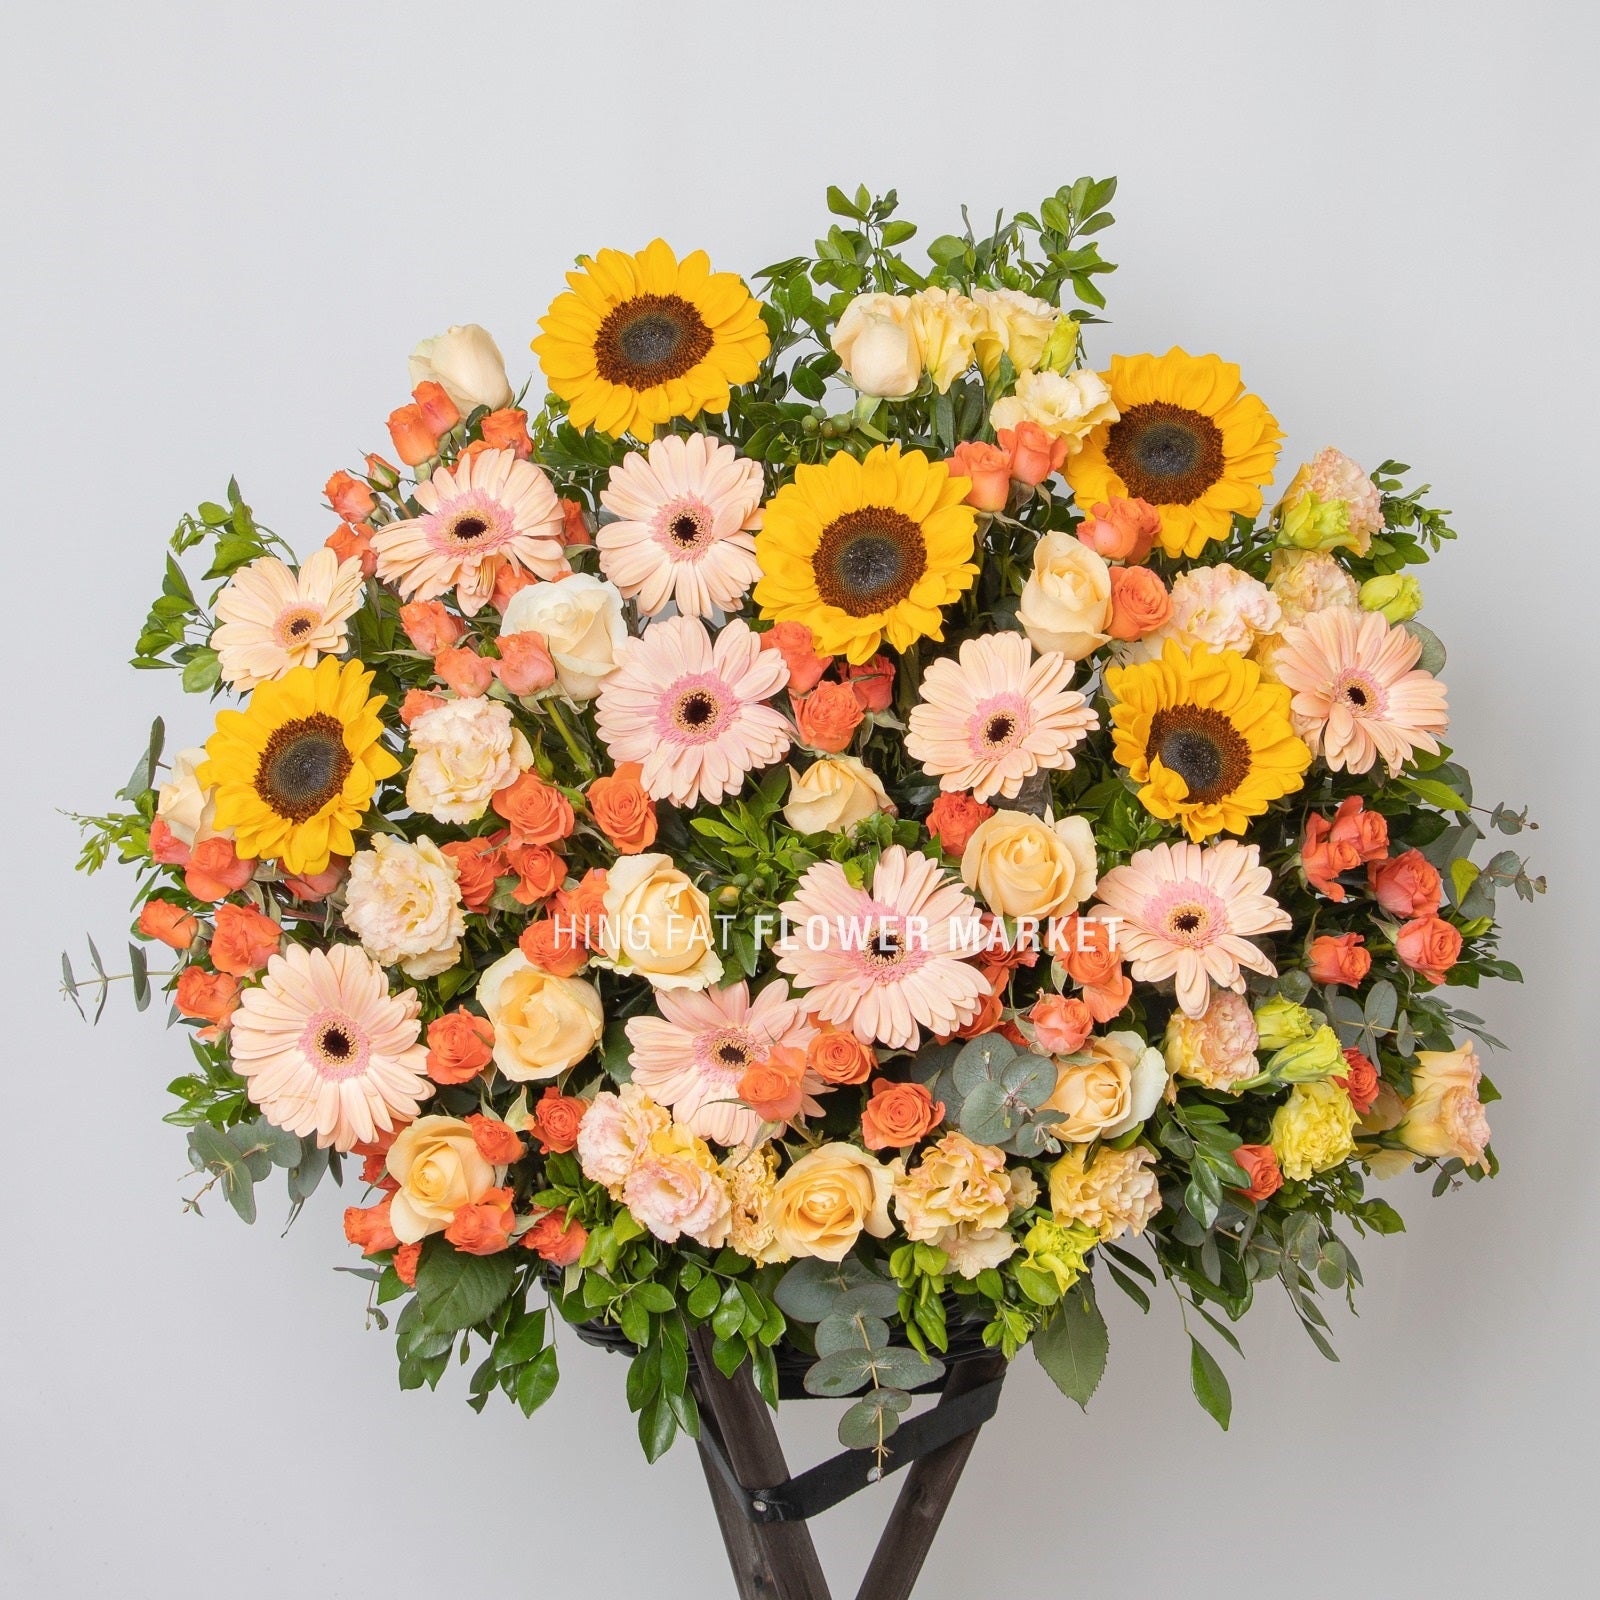 向日葵太陽菊花籃 Sunflower and gerbera flower stand